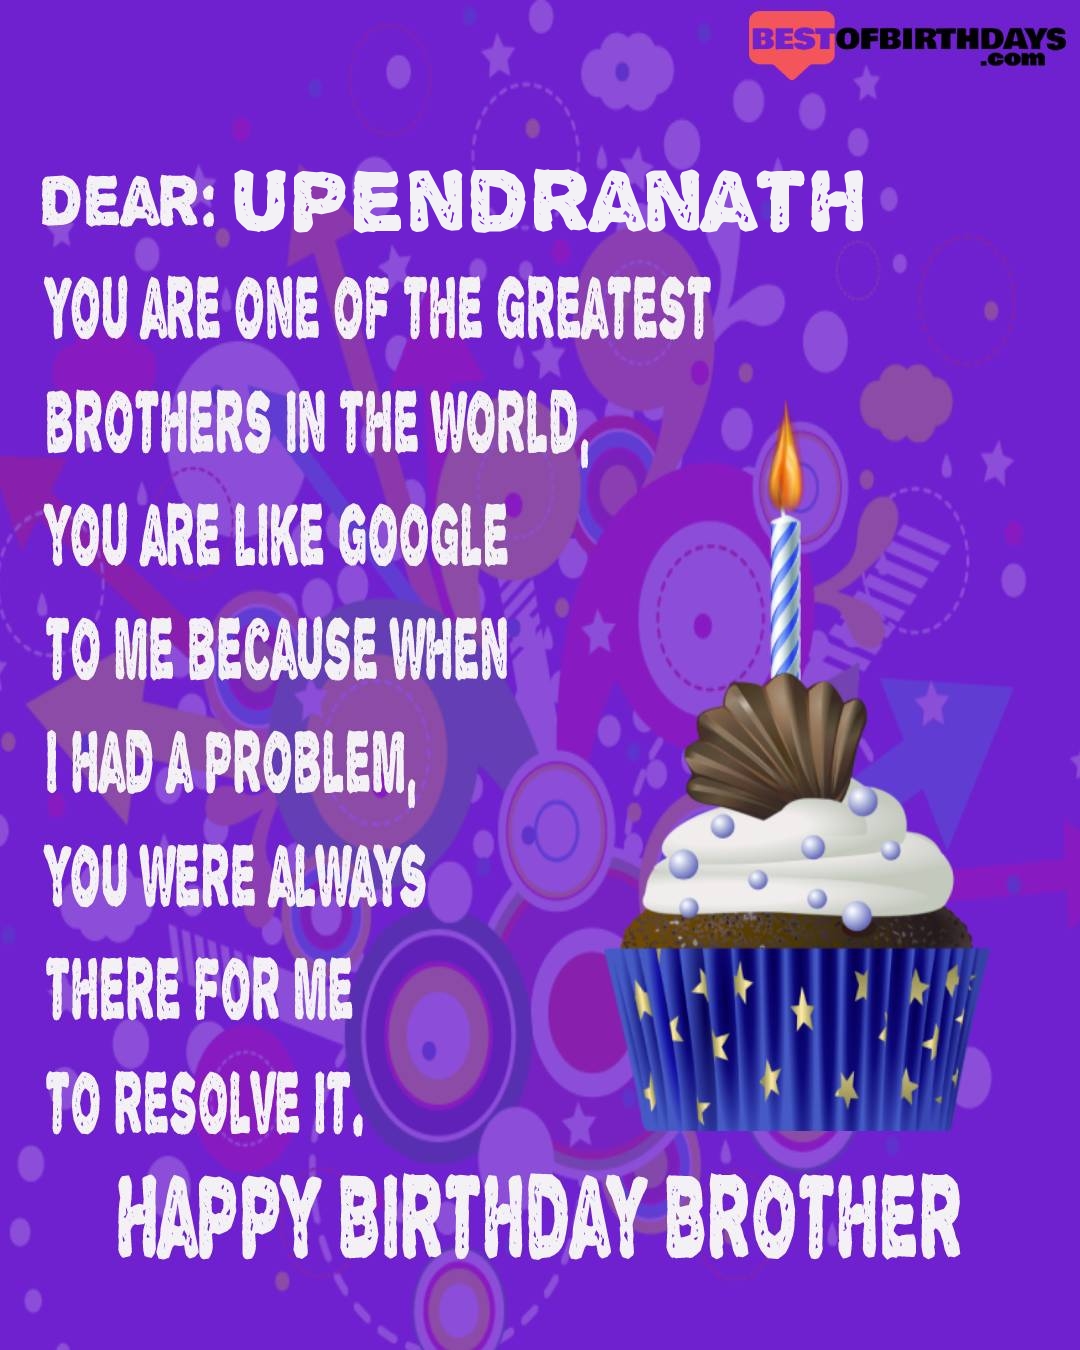 Happy birthday upendranath bhai brother bro